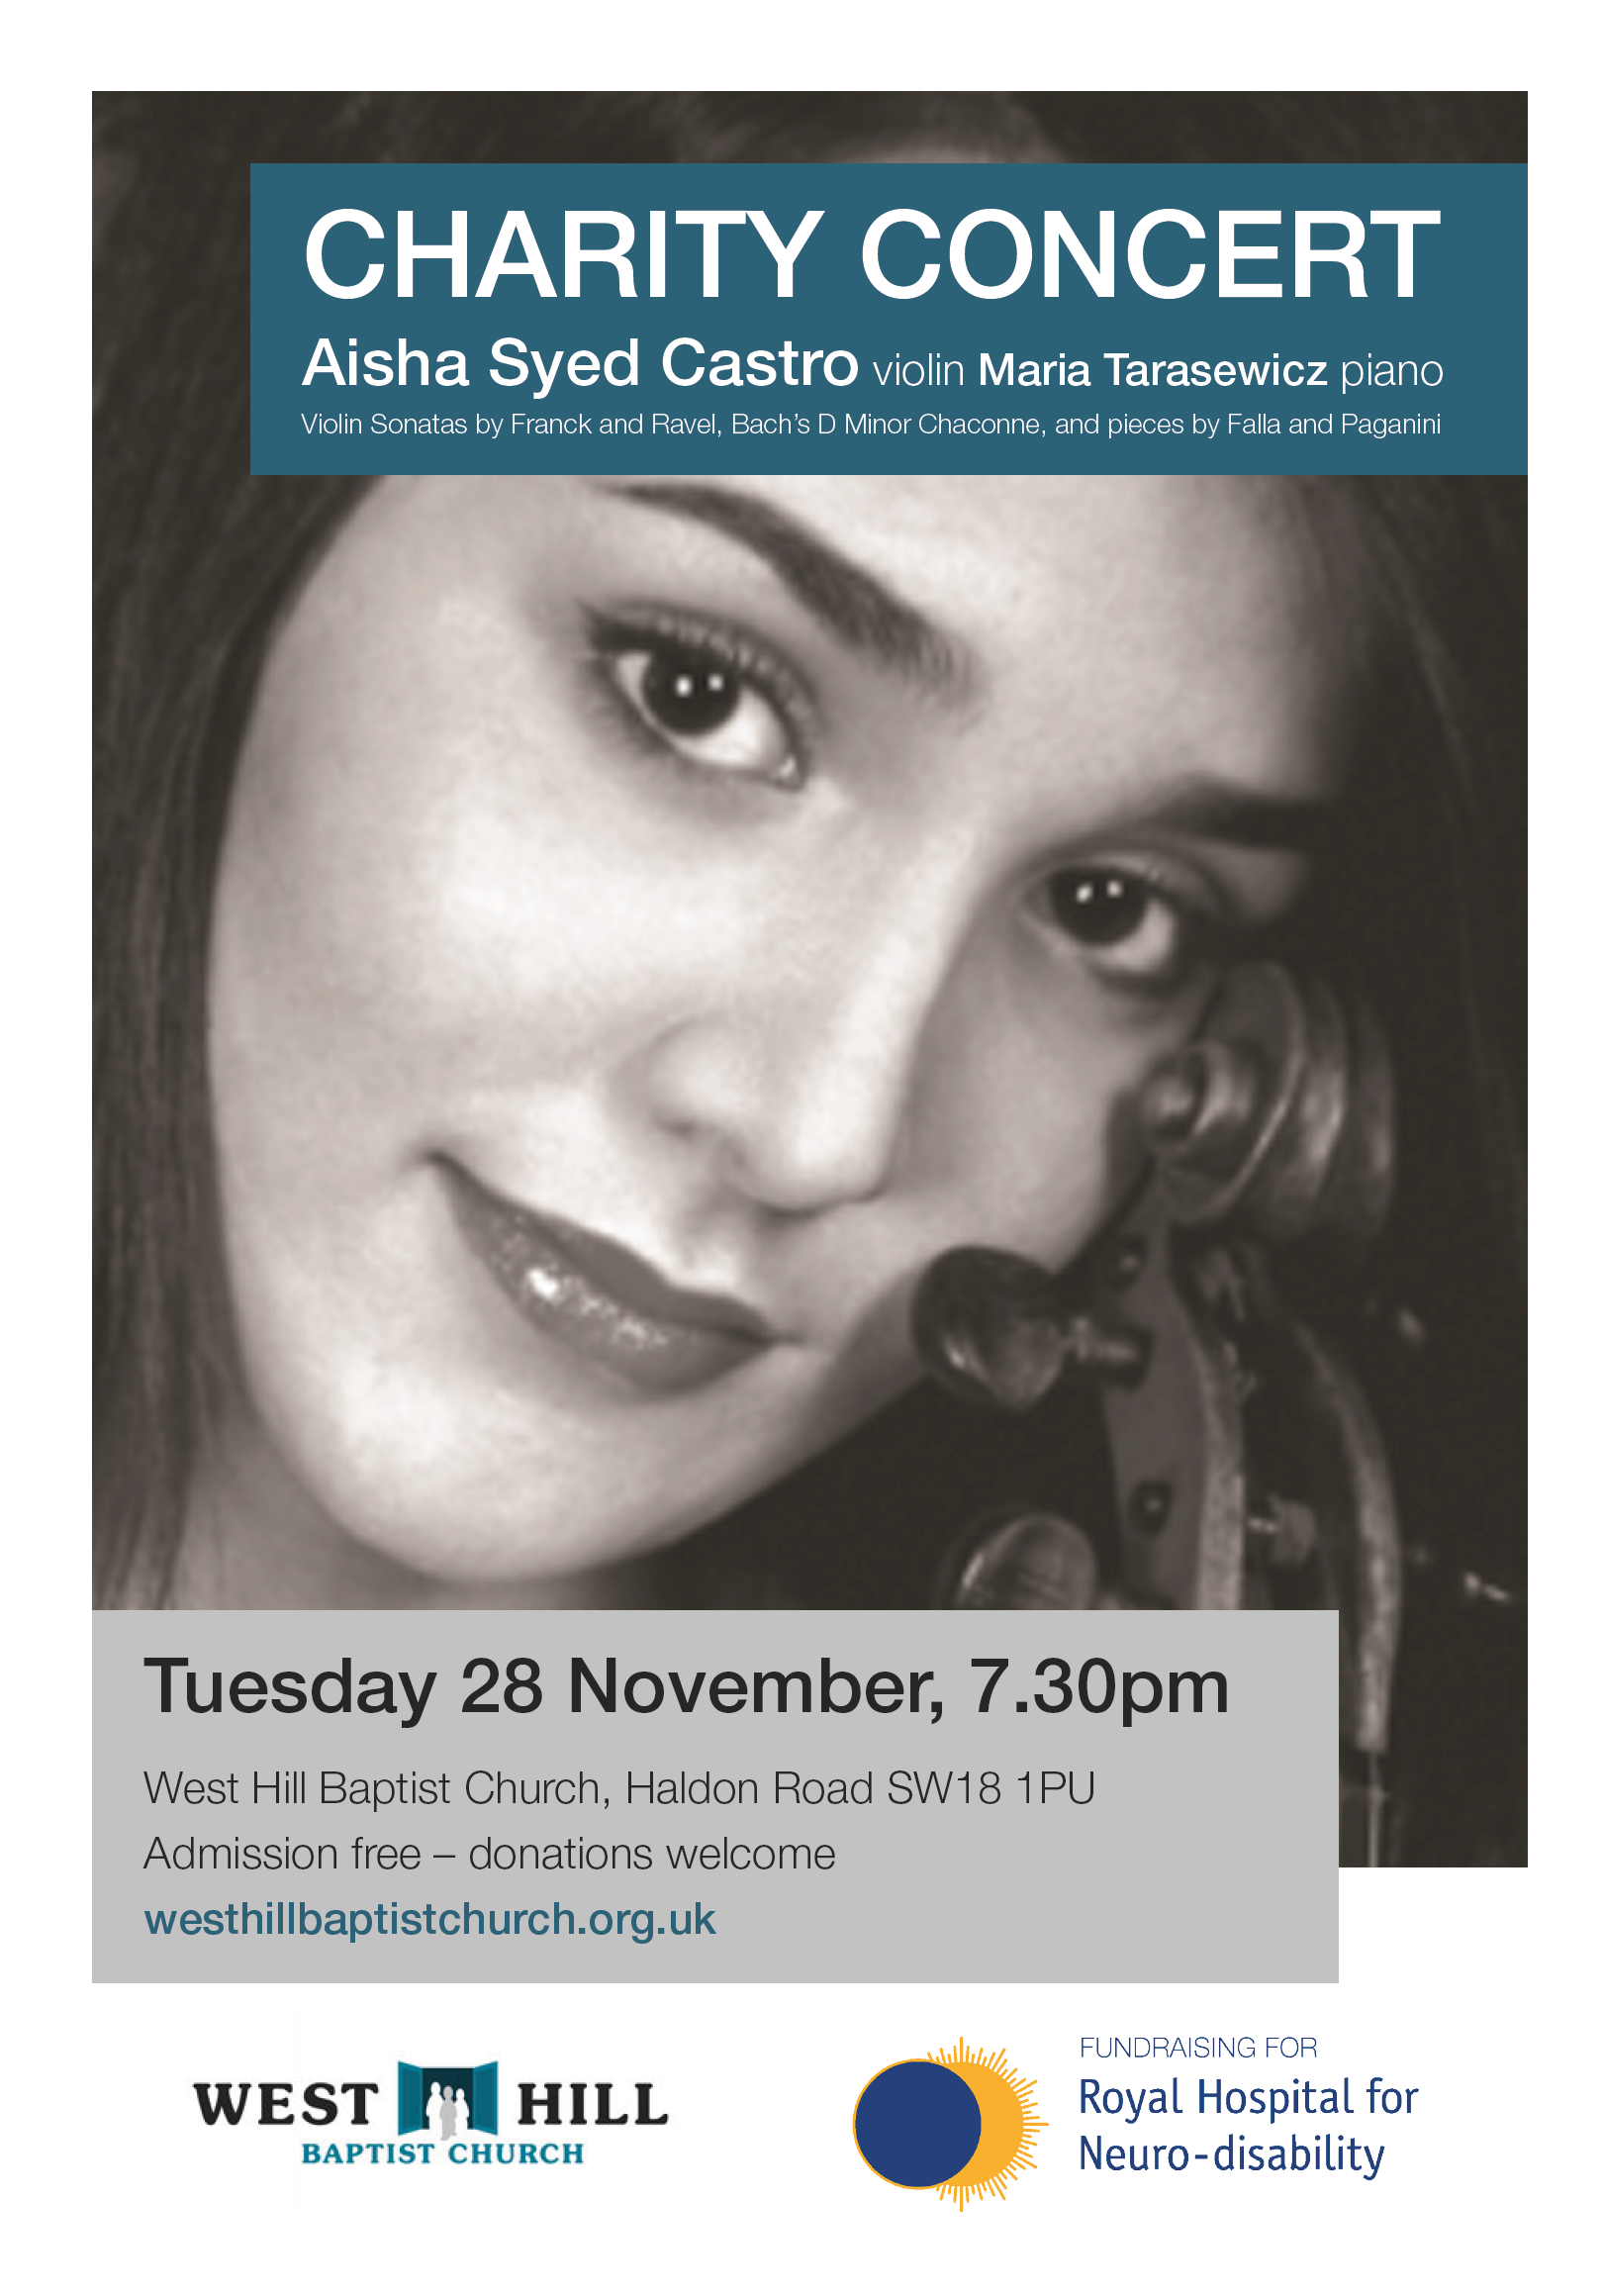 Aisha Syed's Charity Concert